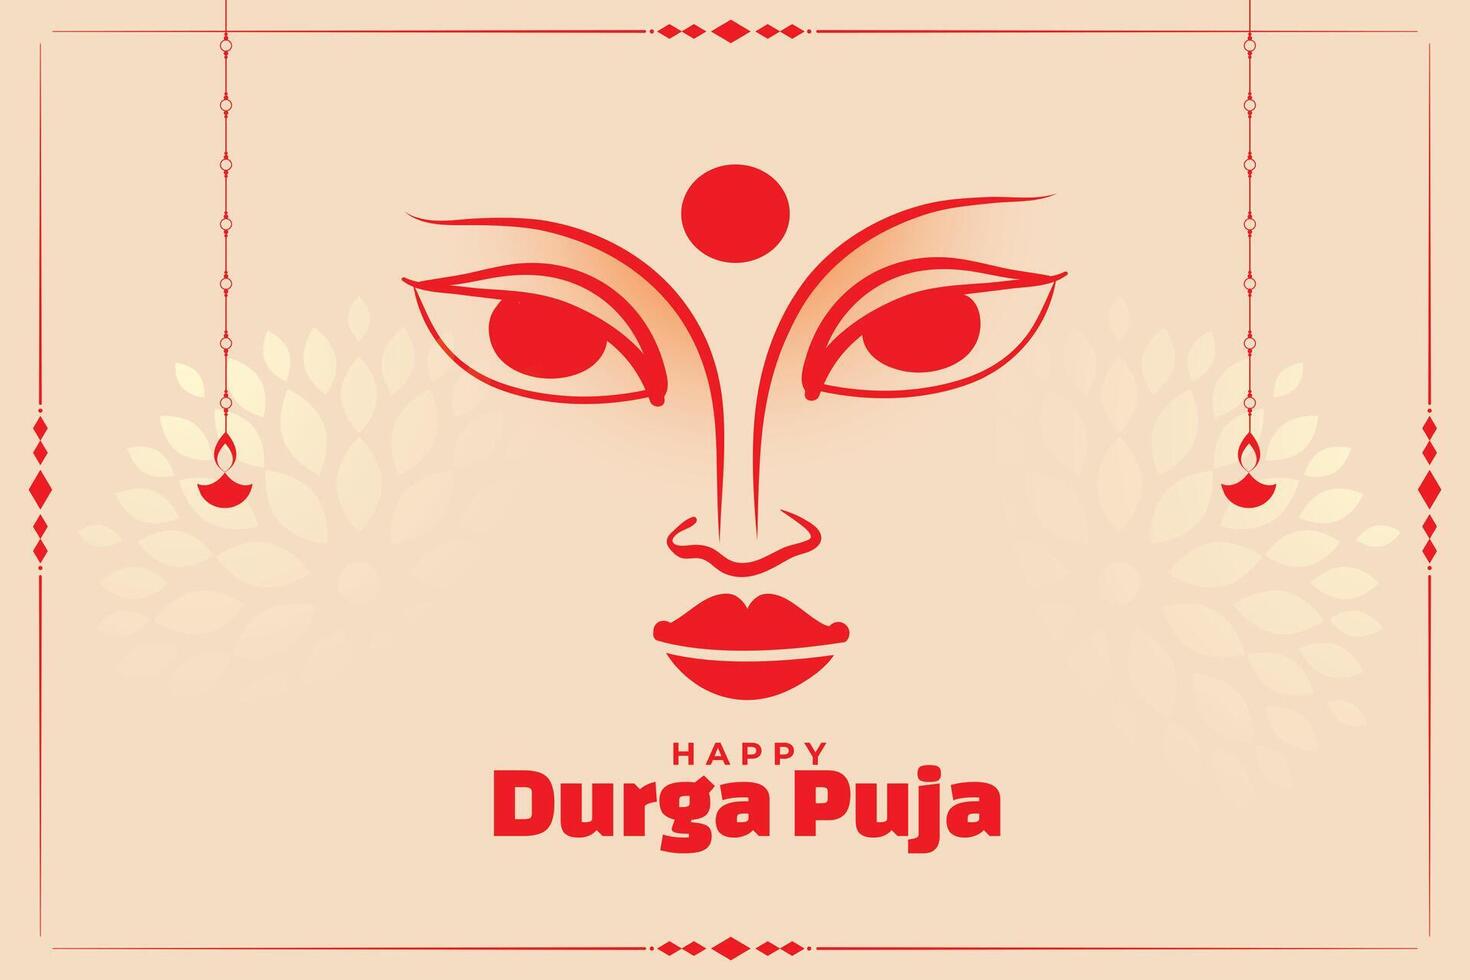 contento Durga pooja festival tarjeta diseño vector